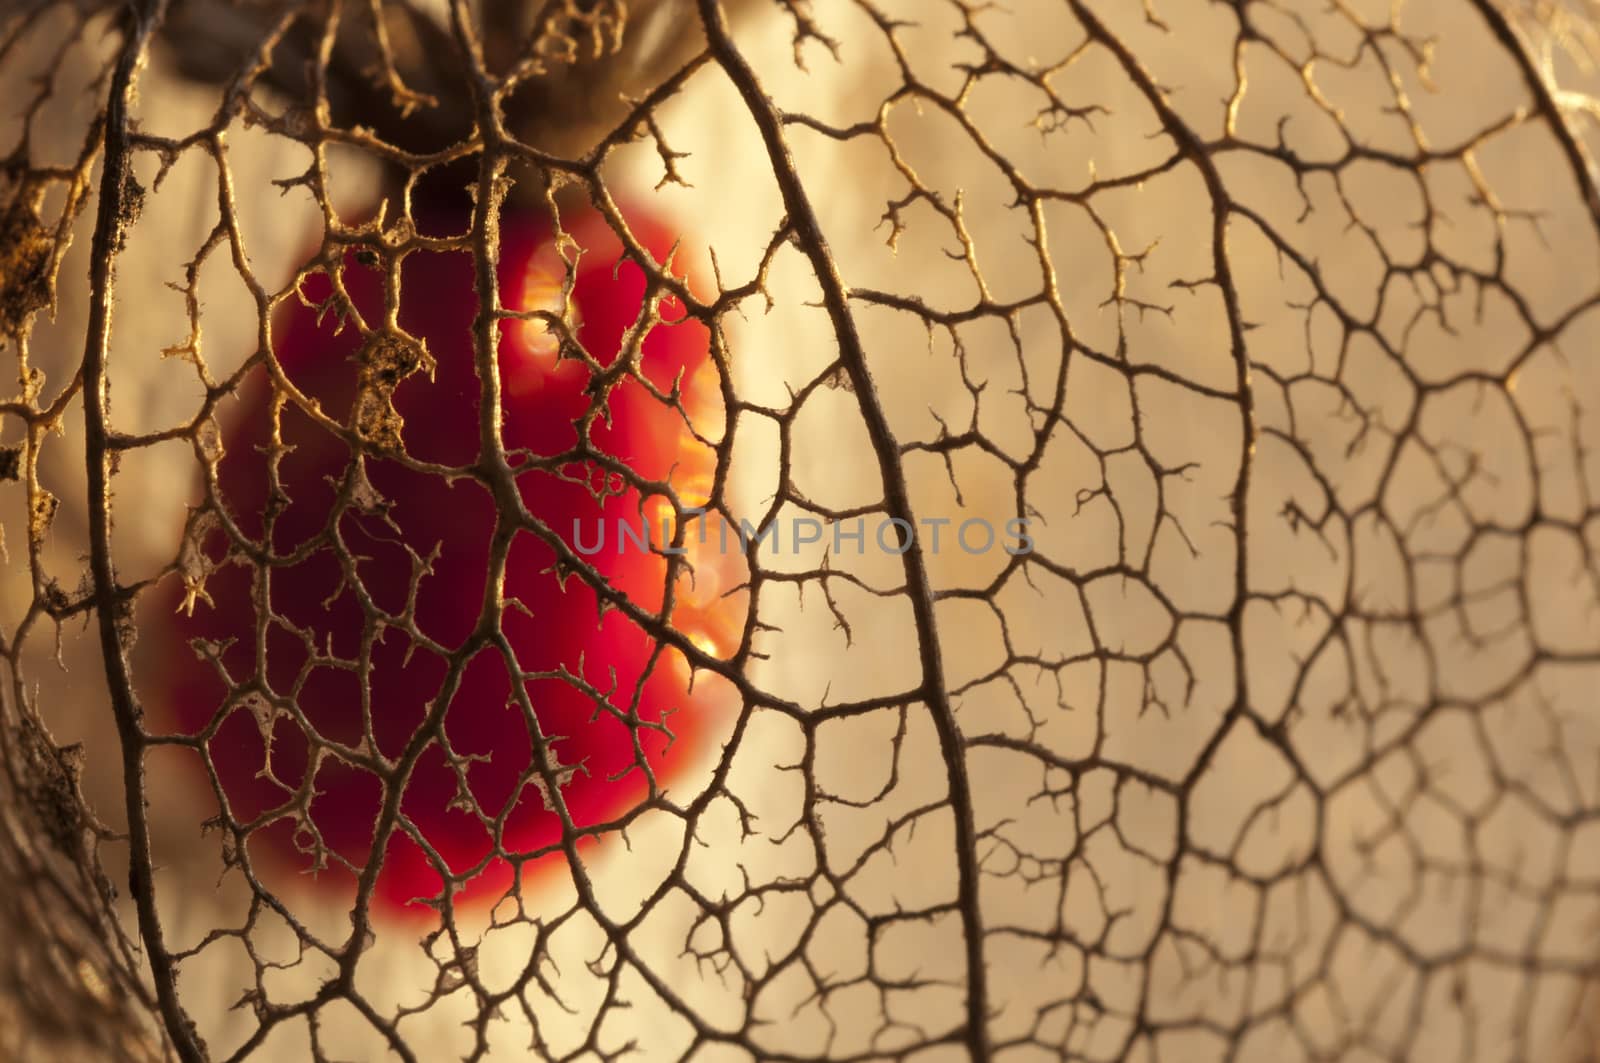 Dried Physalis lantern (cape gooseberry) close up